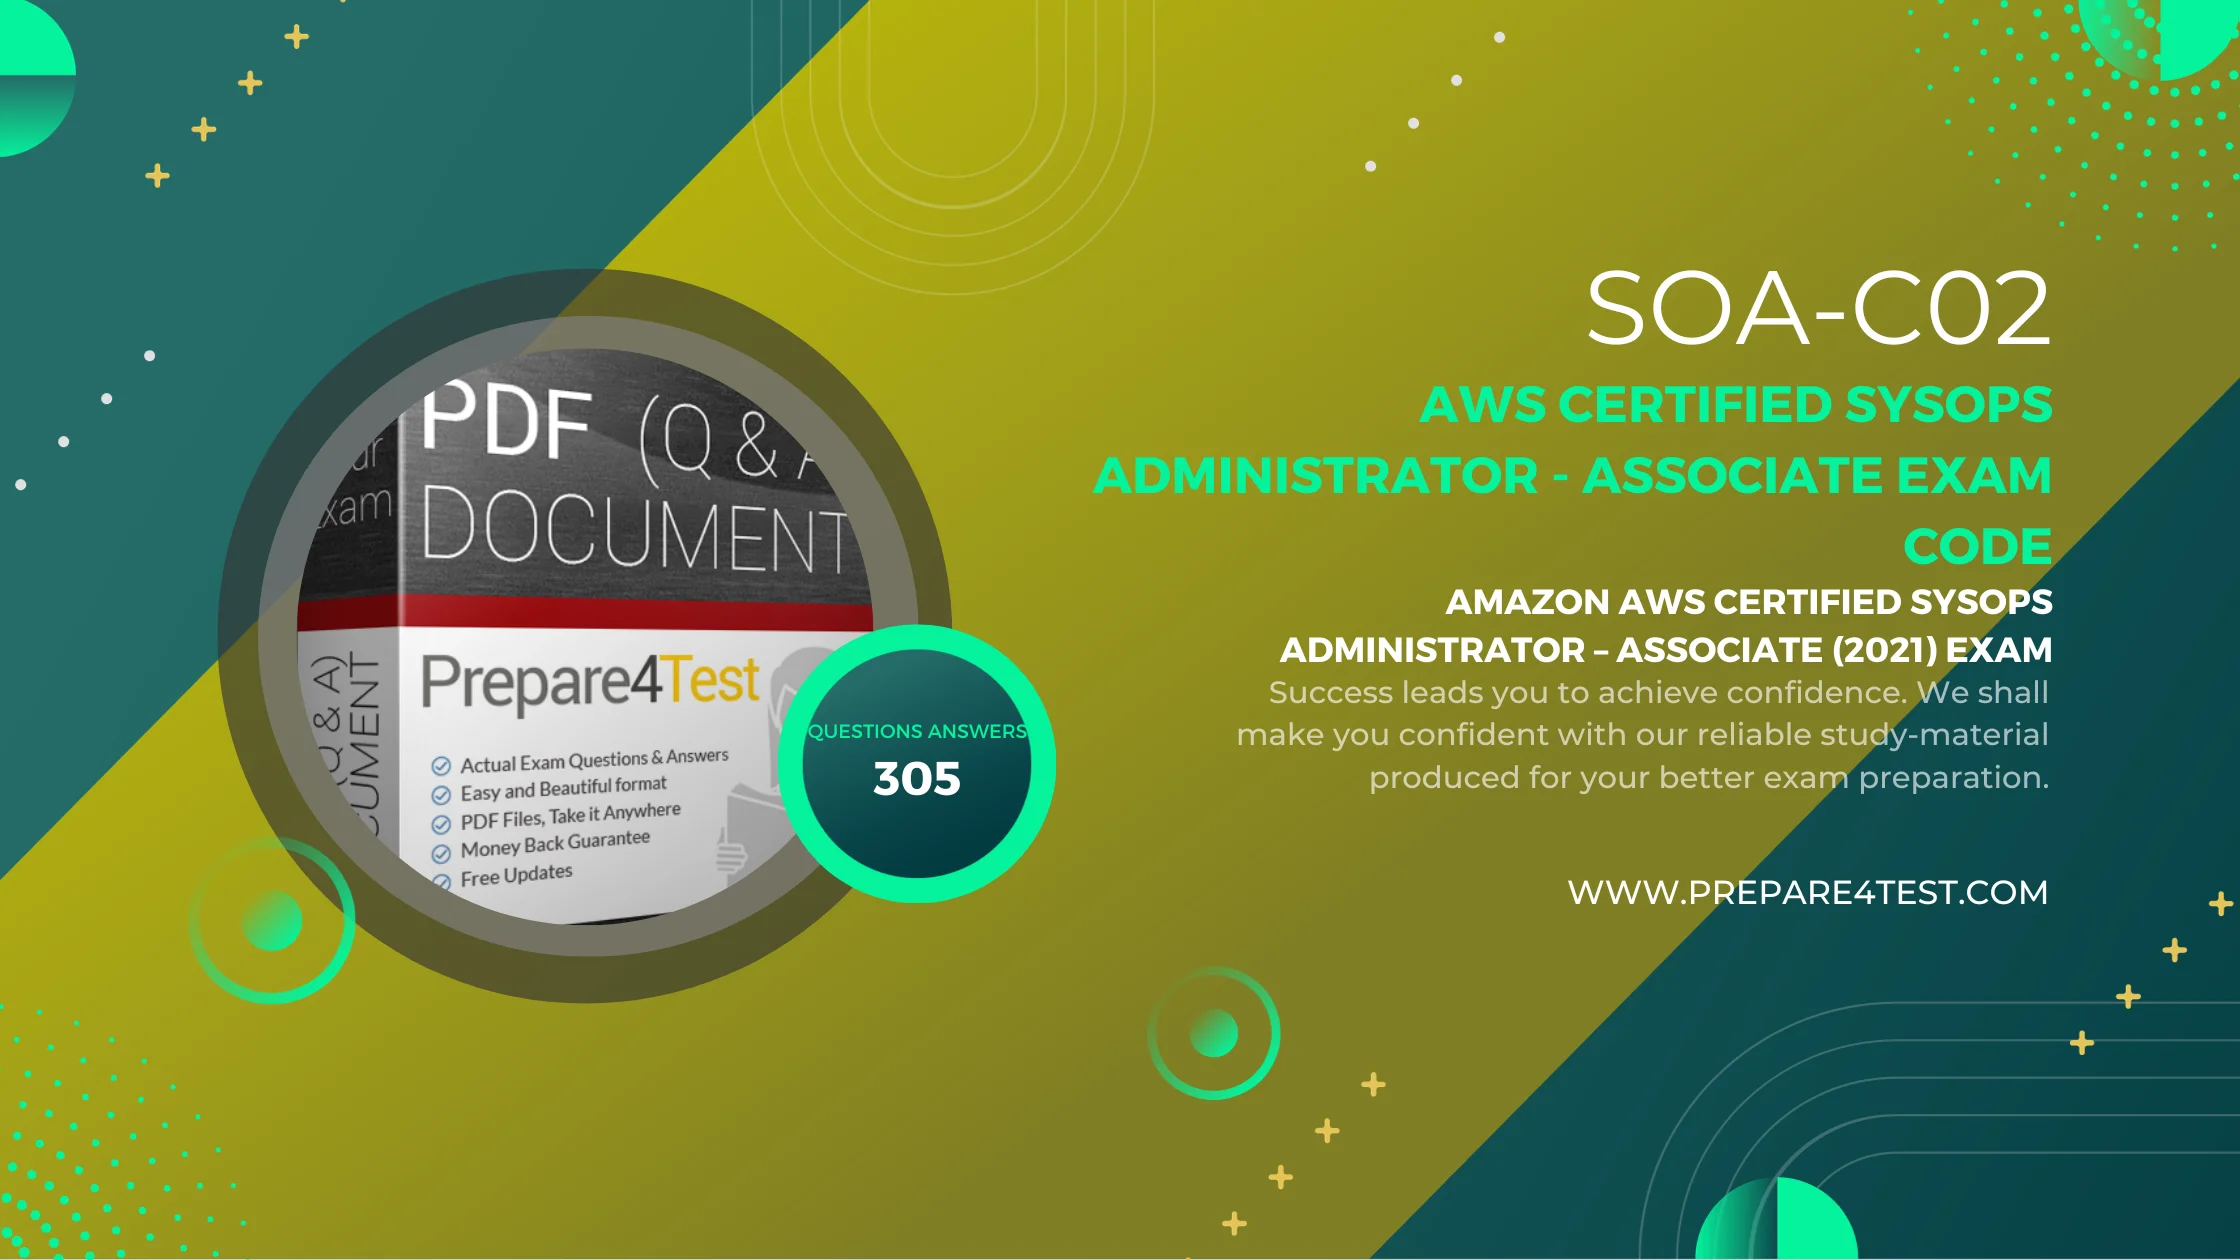 AWS Certified SysOps Administrator - Associate Exam Code guarantee